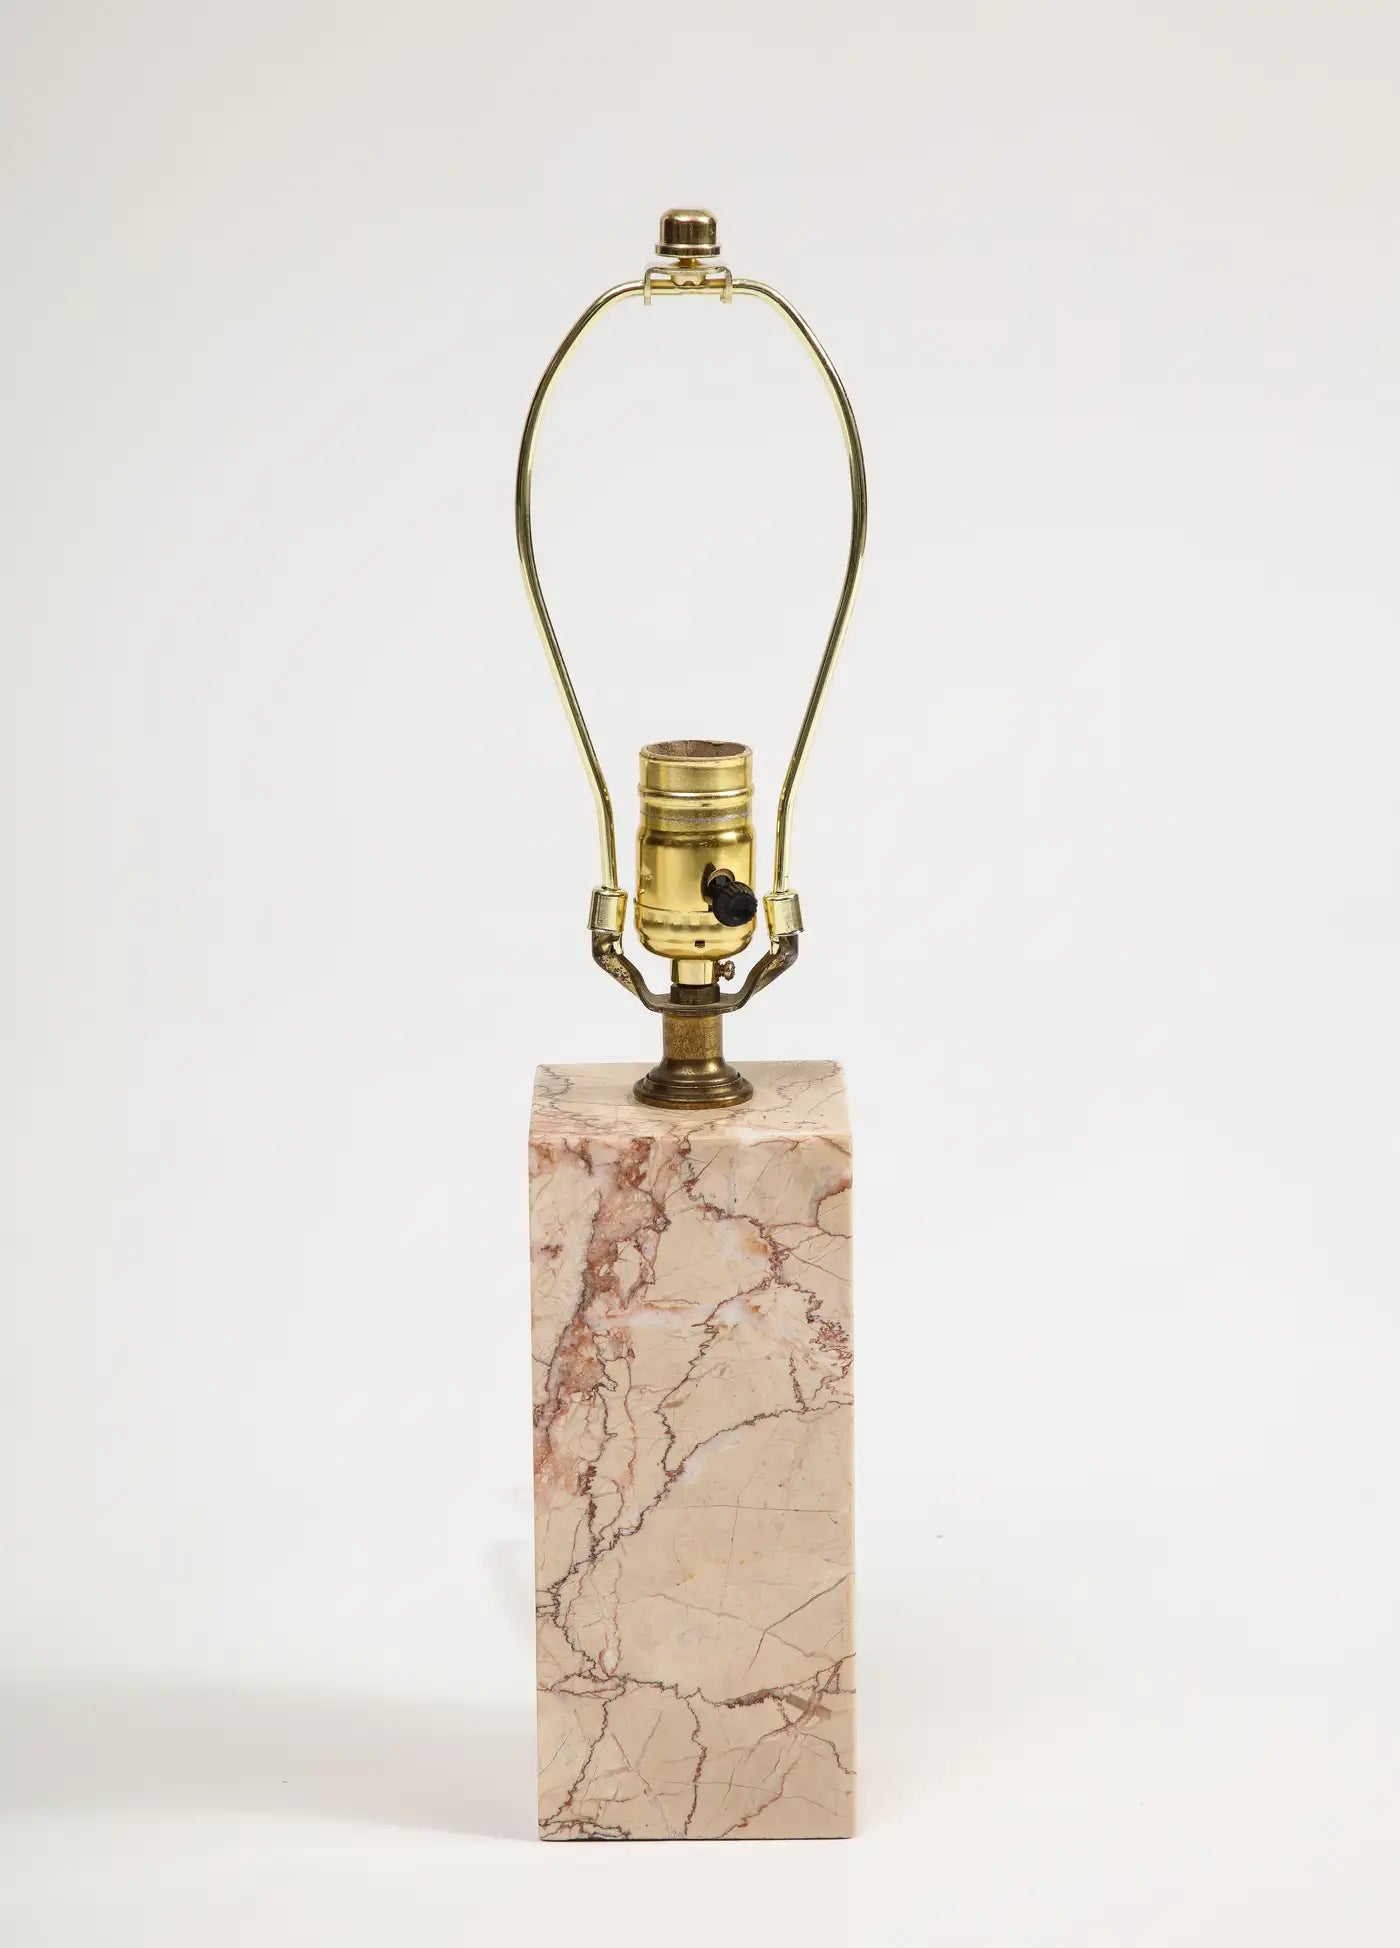 Midcentury Modern Pink Marble Table Lamp attributed to T.H. Robsjohn-Gibbings